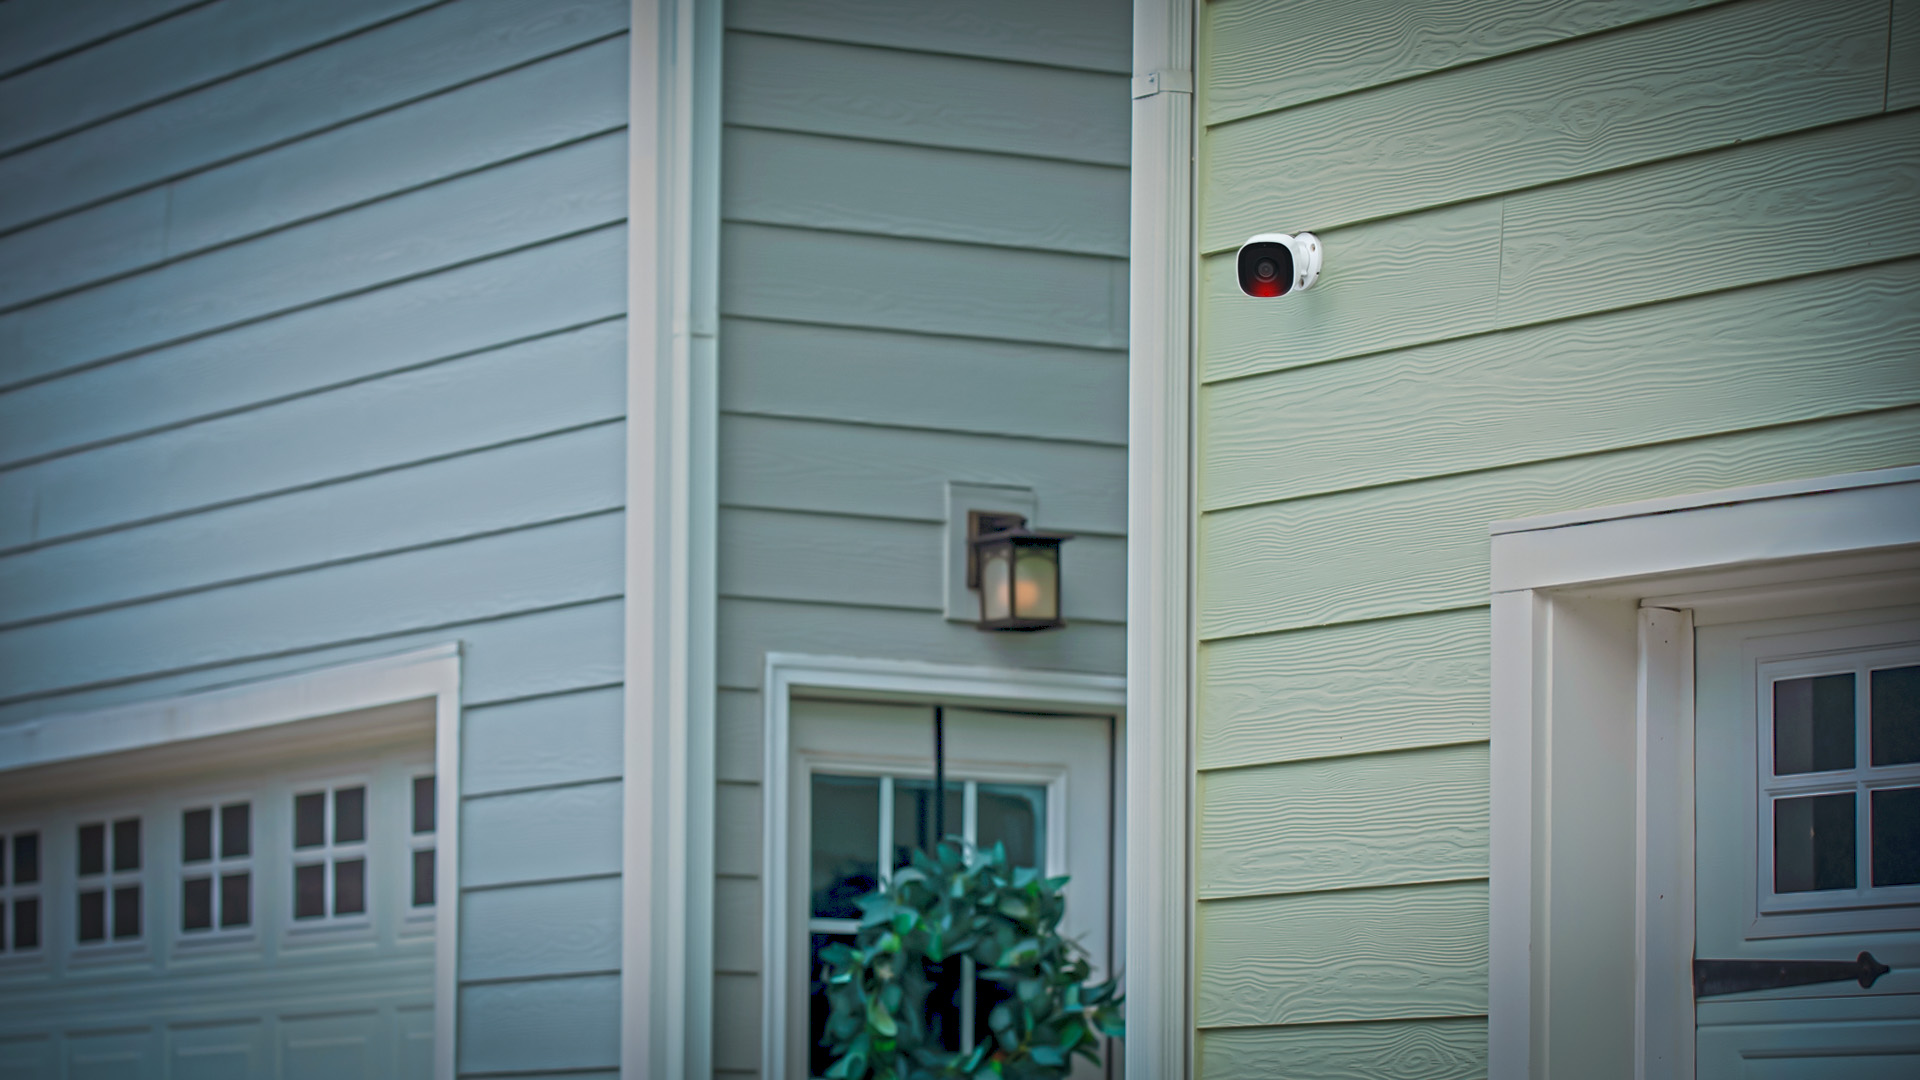 Outdoor Camera | CPI Security